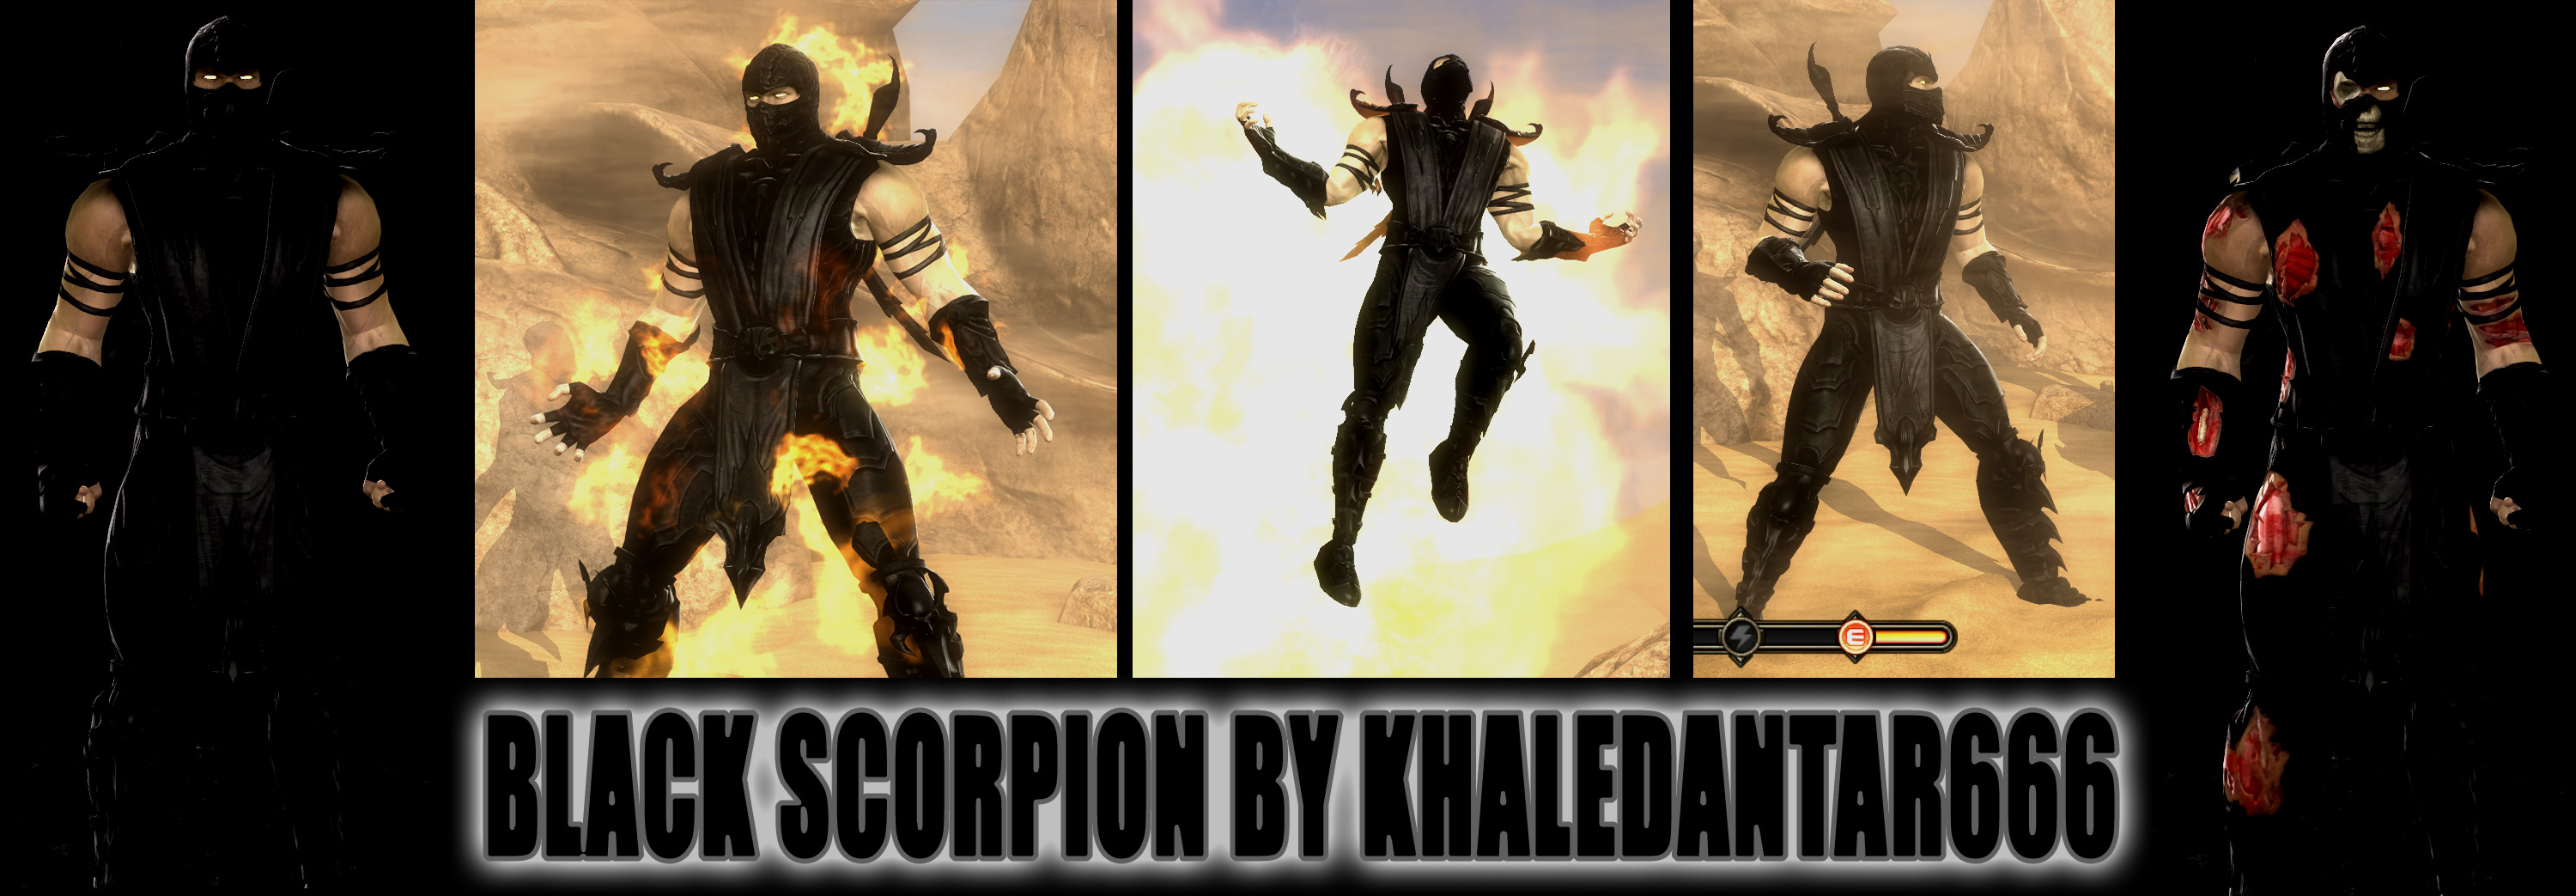 Descargar Kratos Para Mortal Kombat 9 Pc Download [TOP] black_scorpion_by_khaledantar666-d6d3zb3